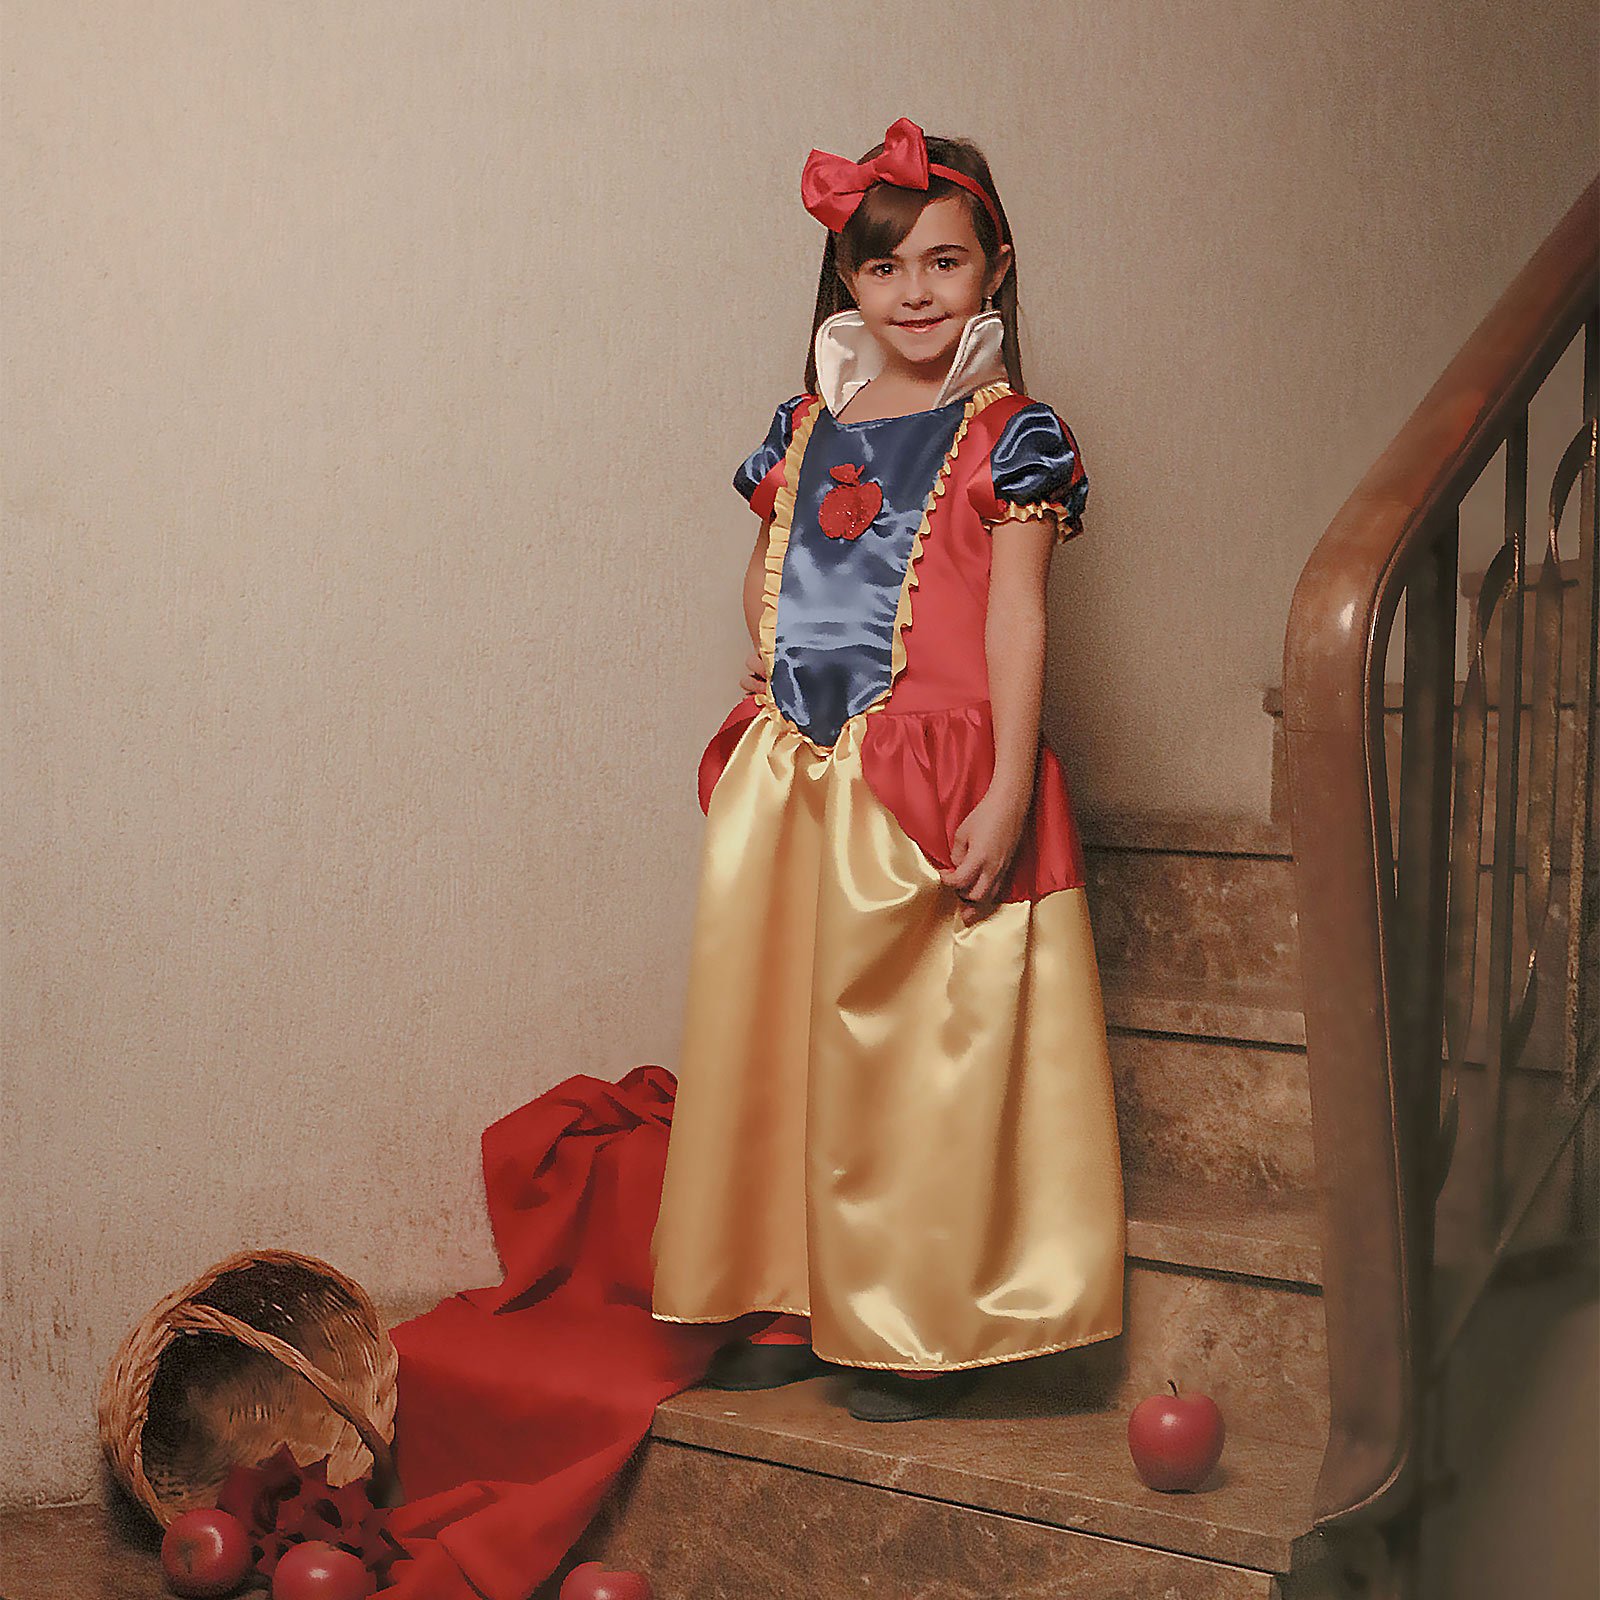 Snow White - costume children